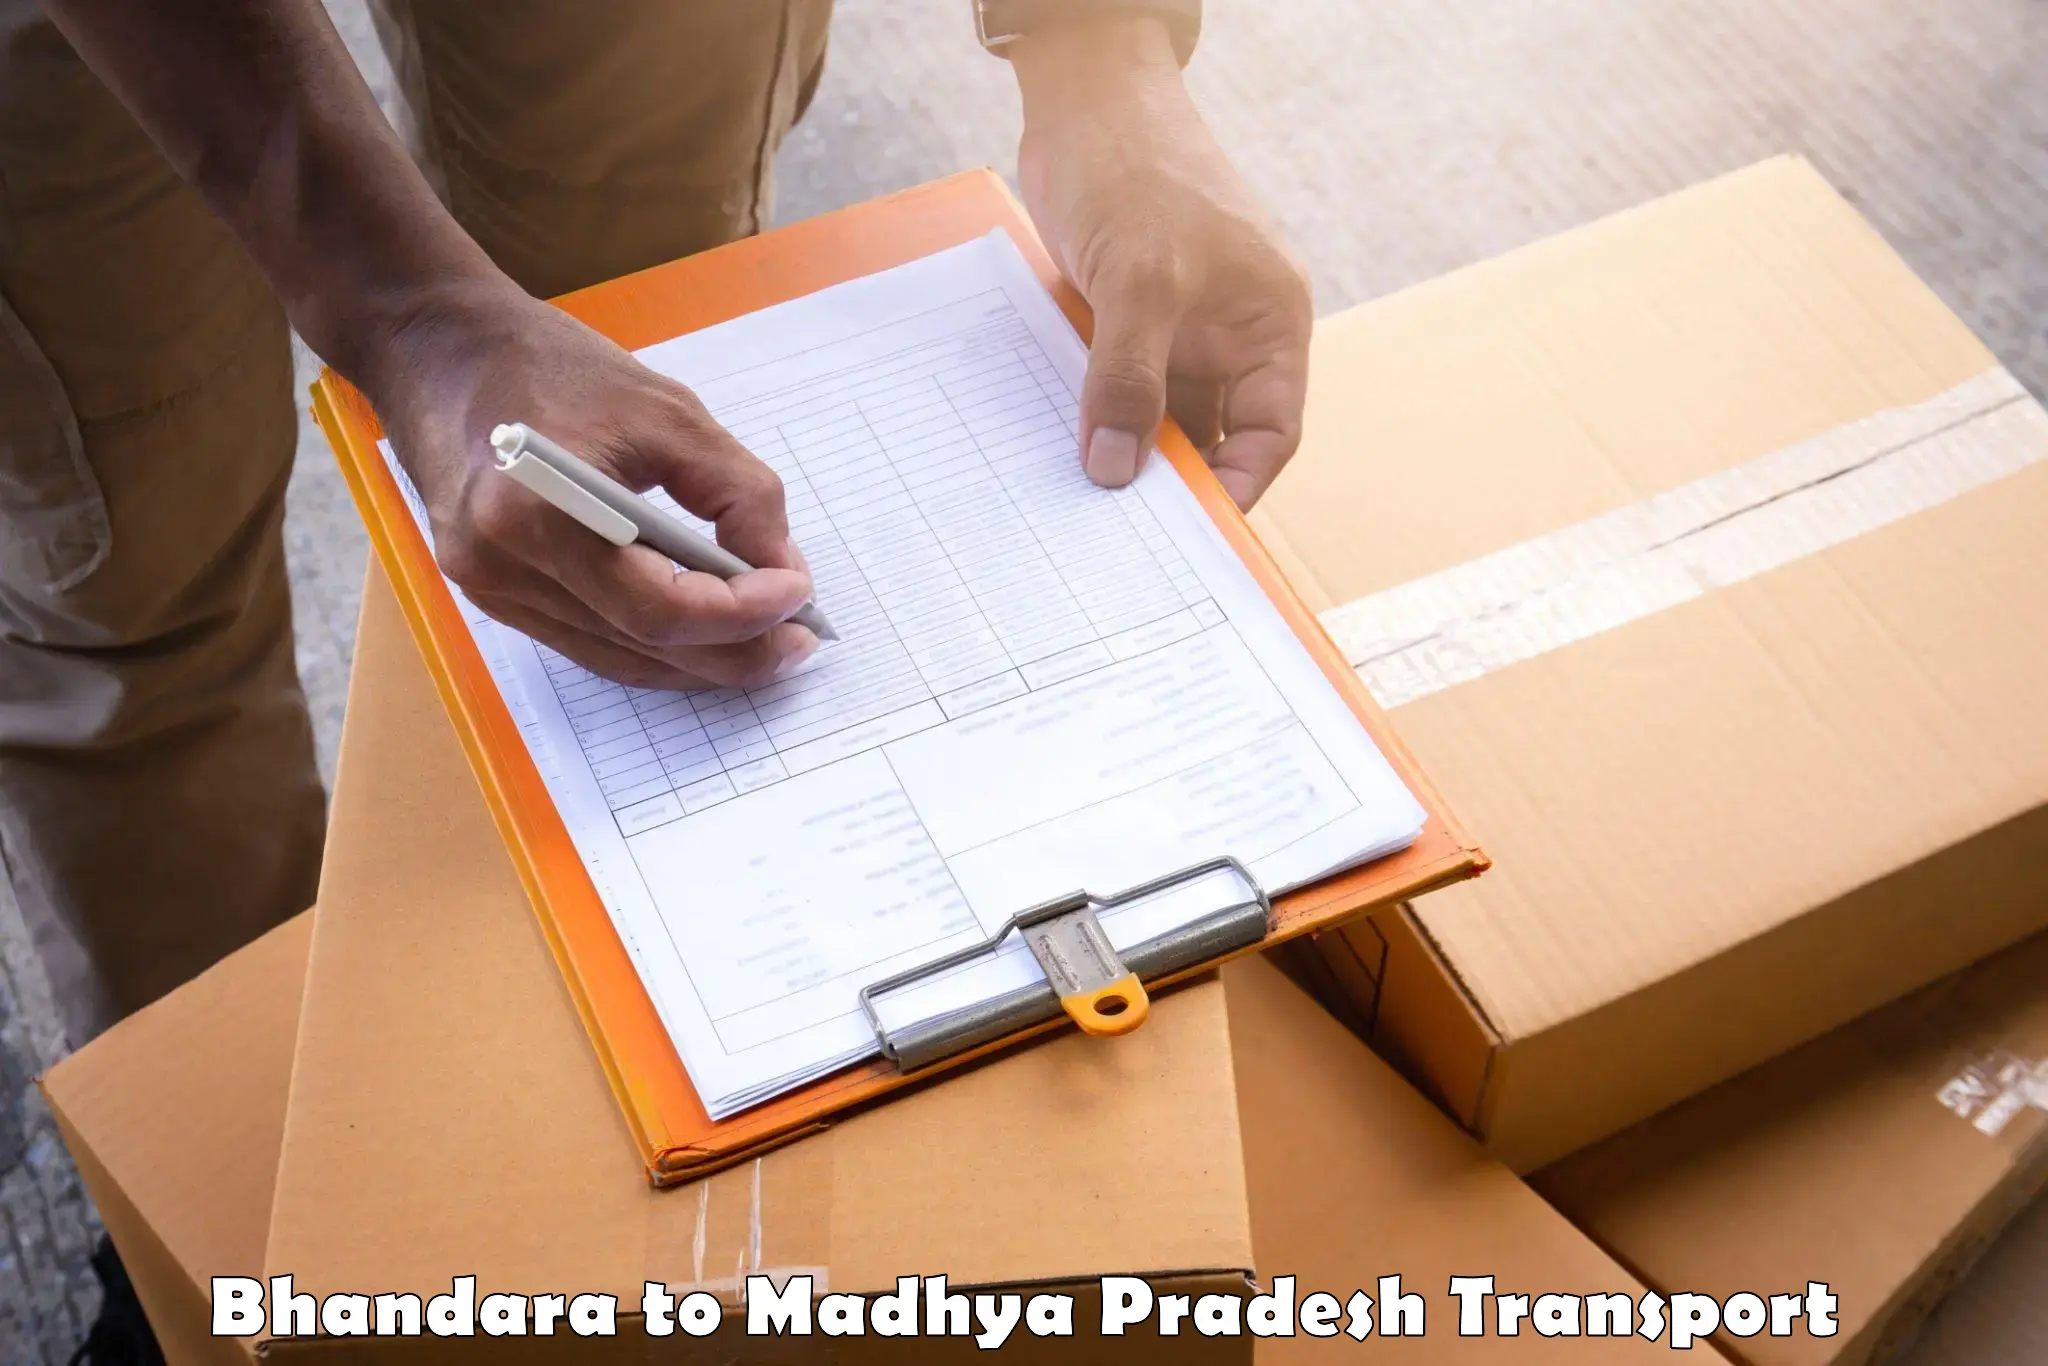 Shipping partner Bhandara to Niwari